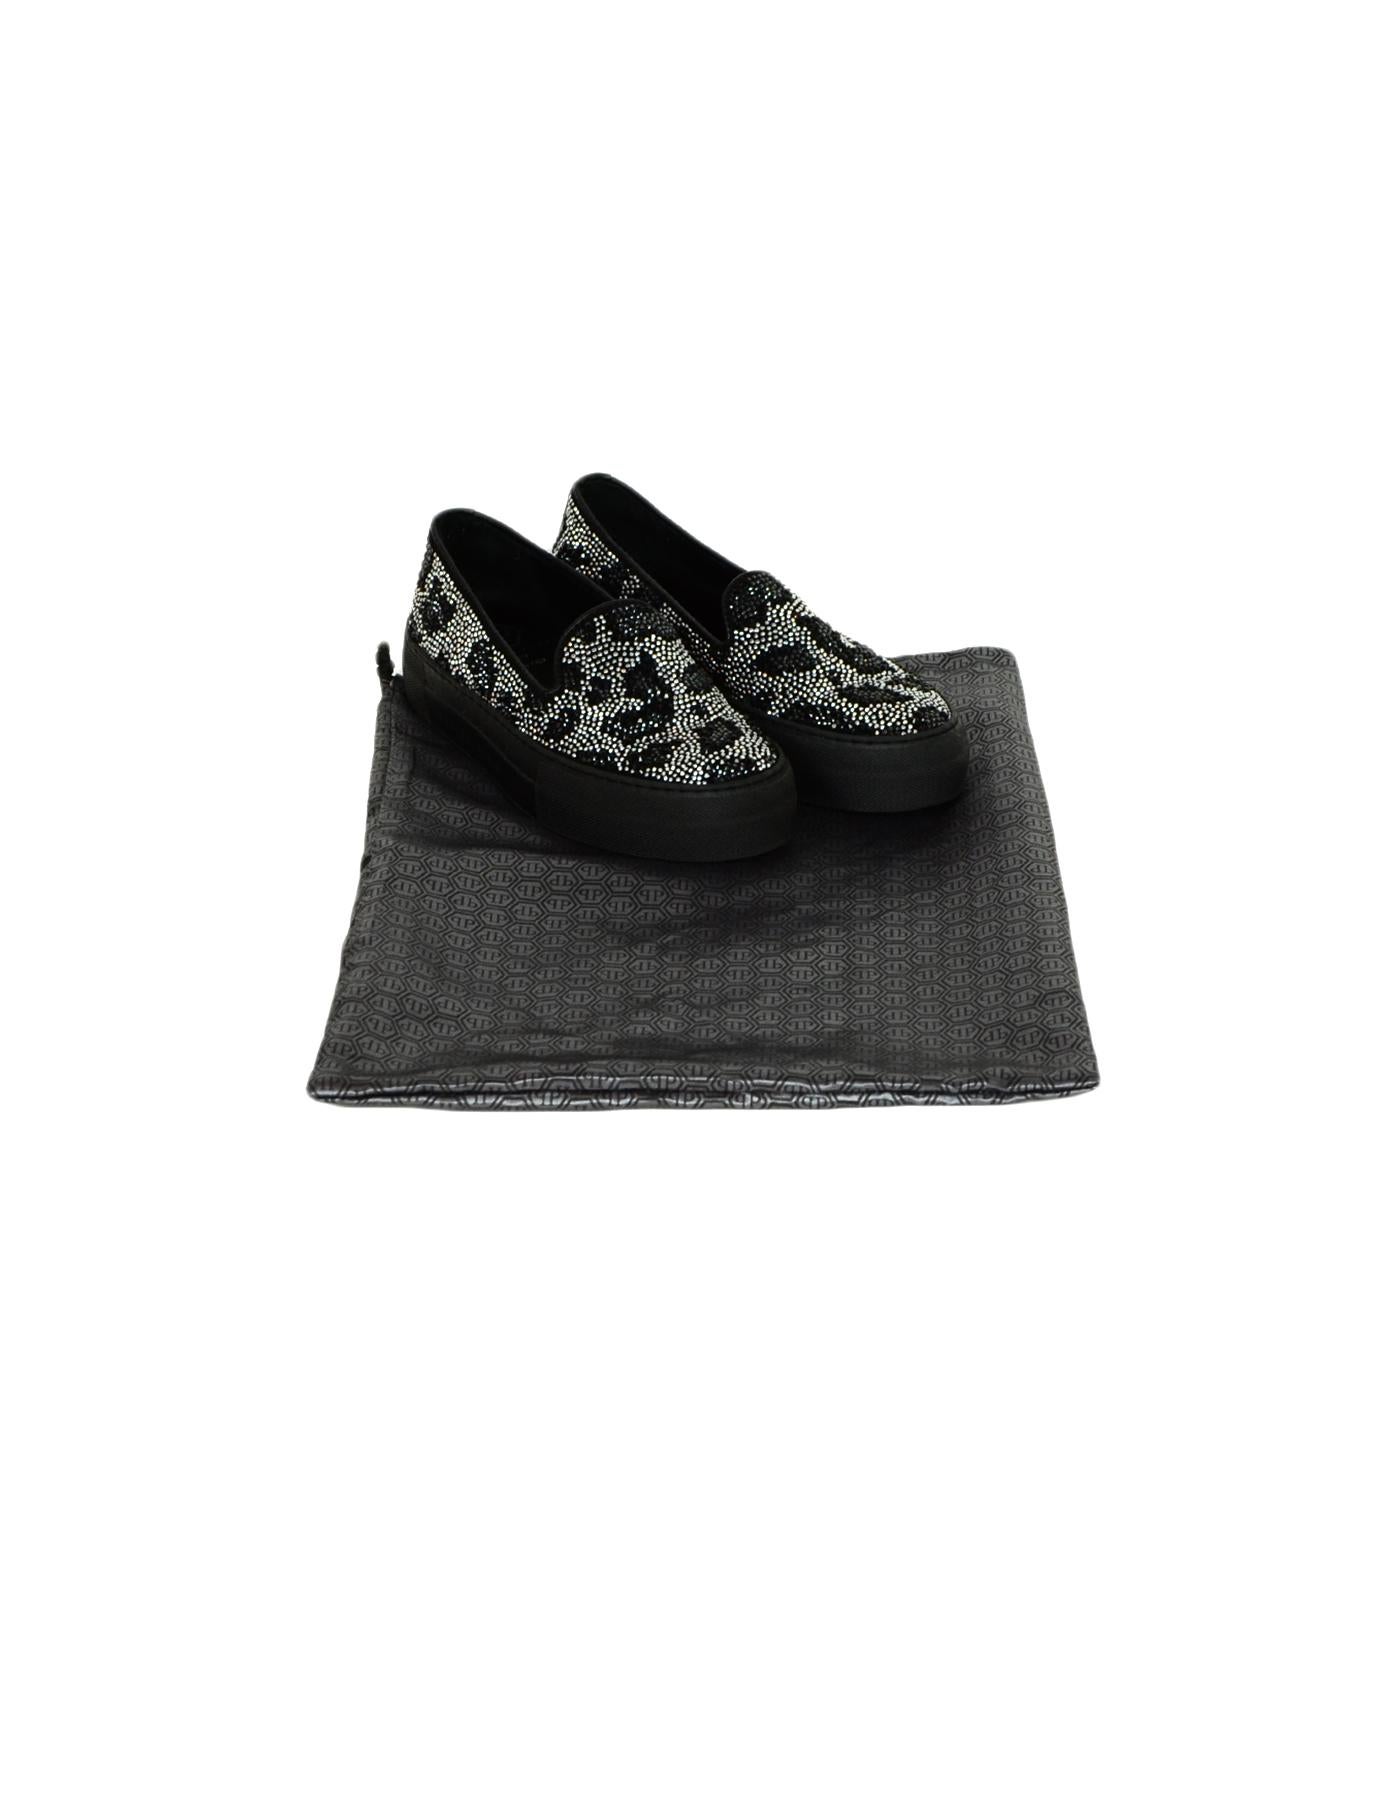 Philipp Plein Black/ Silver Leopard Print Crystal Sneakers sz 36 2